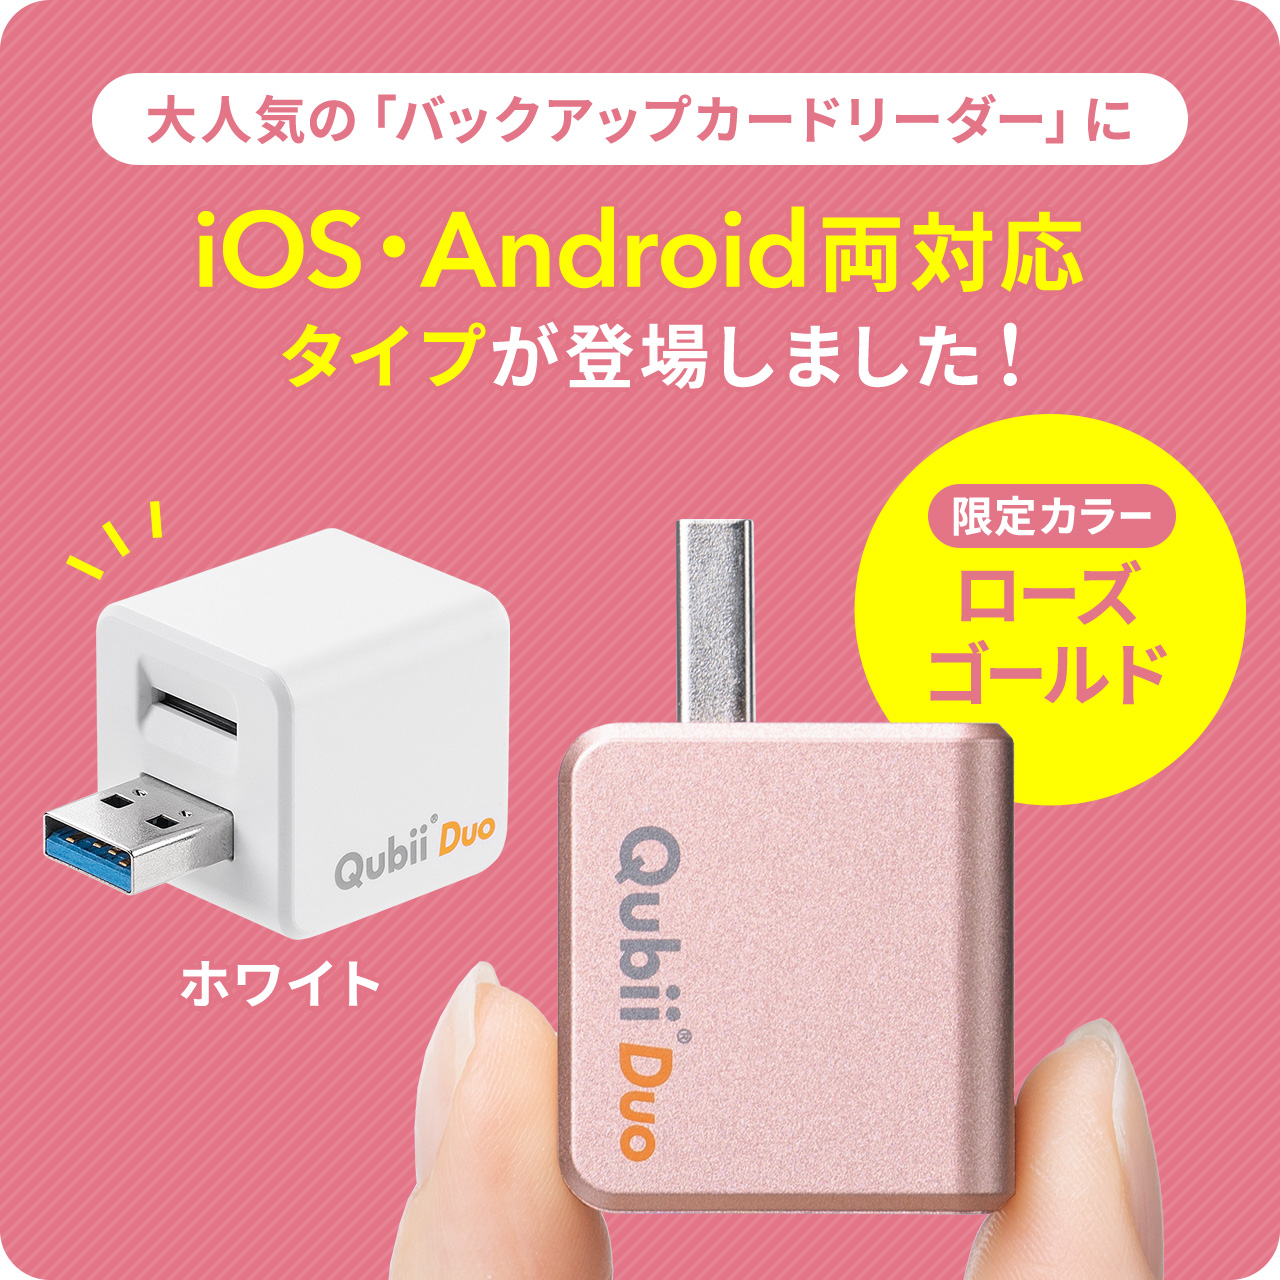 ACアダプタと本体を接続し、専用アプリ「Qubii Pro」を利用してiPhone 